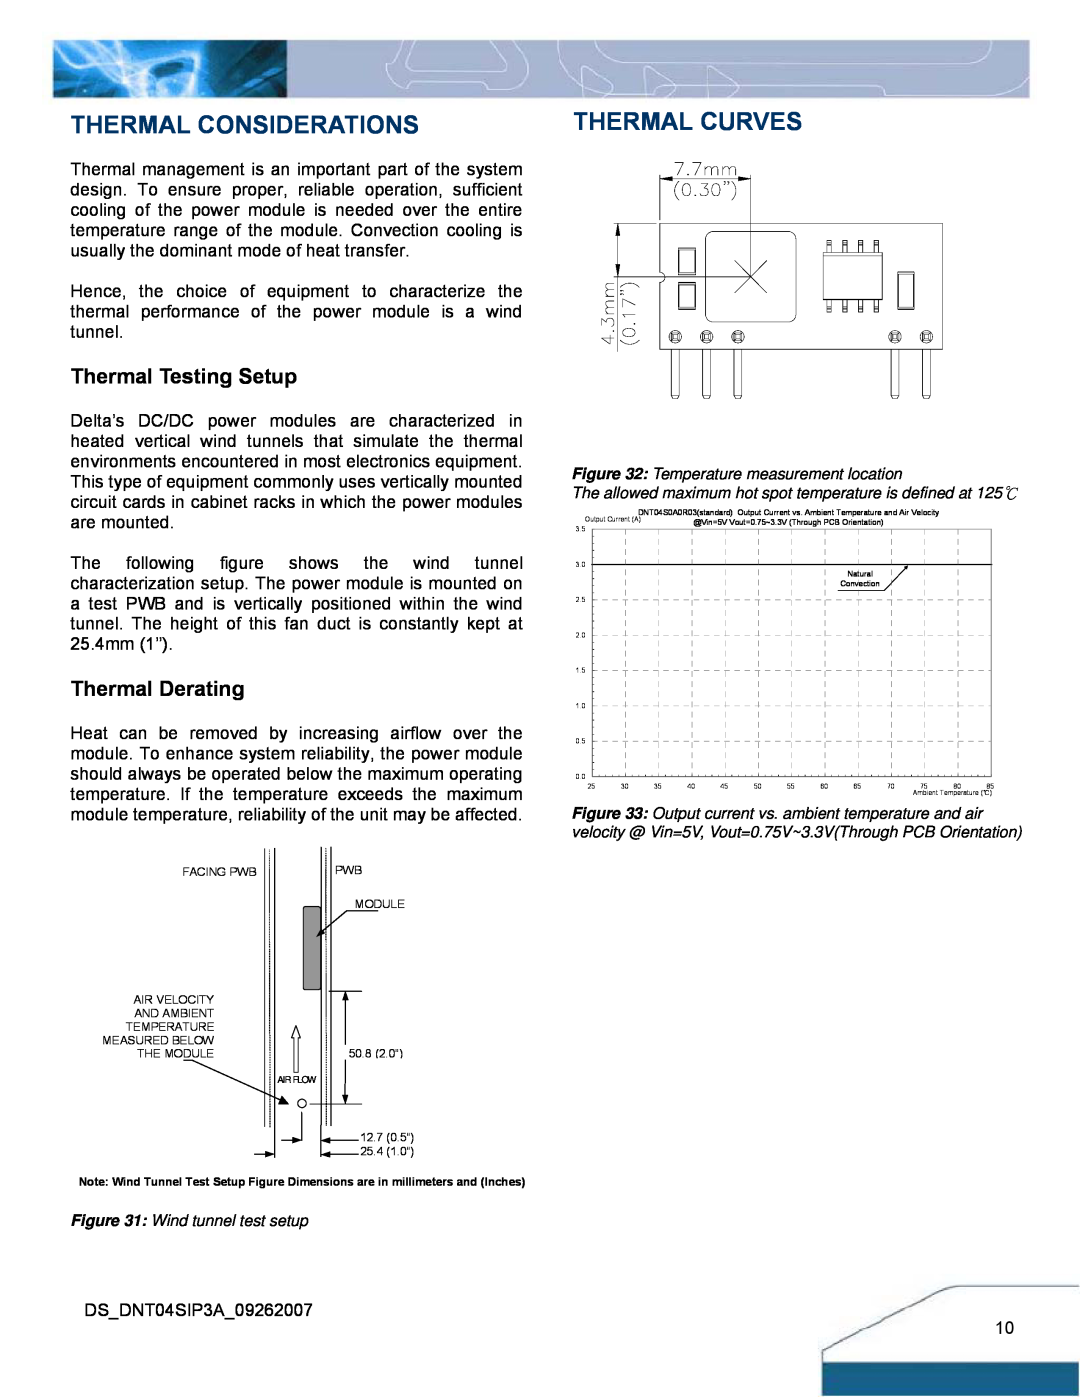 Delta Electronics DNT04 manual Thermal Considerations, Thermal Curves, Thermal Testing Setup, Thermal Derating 